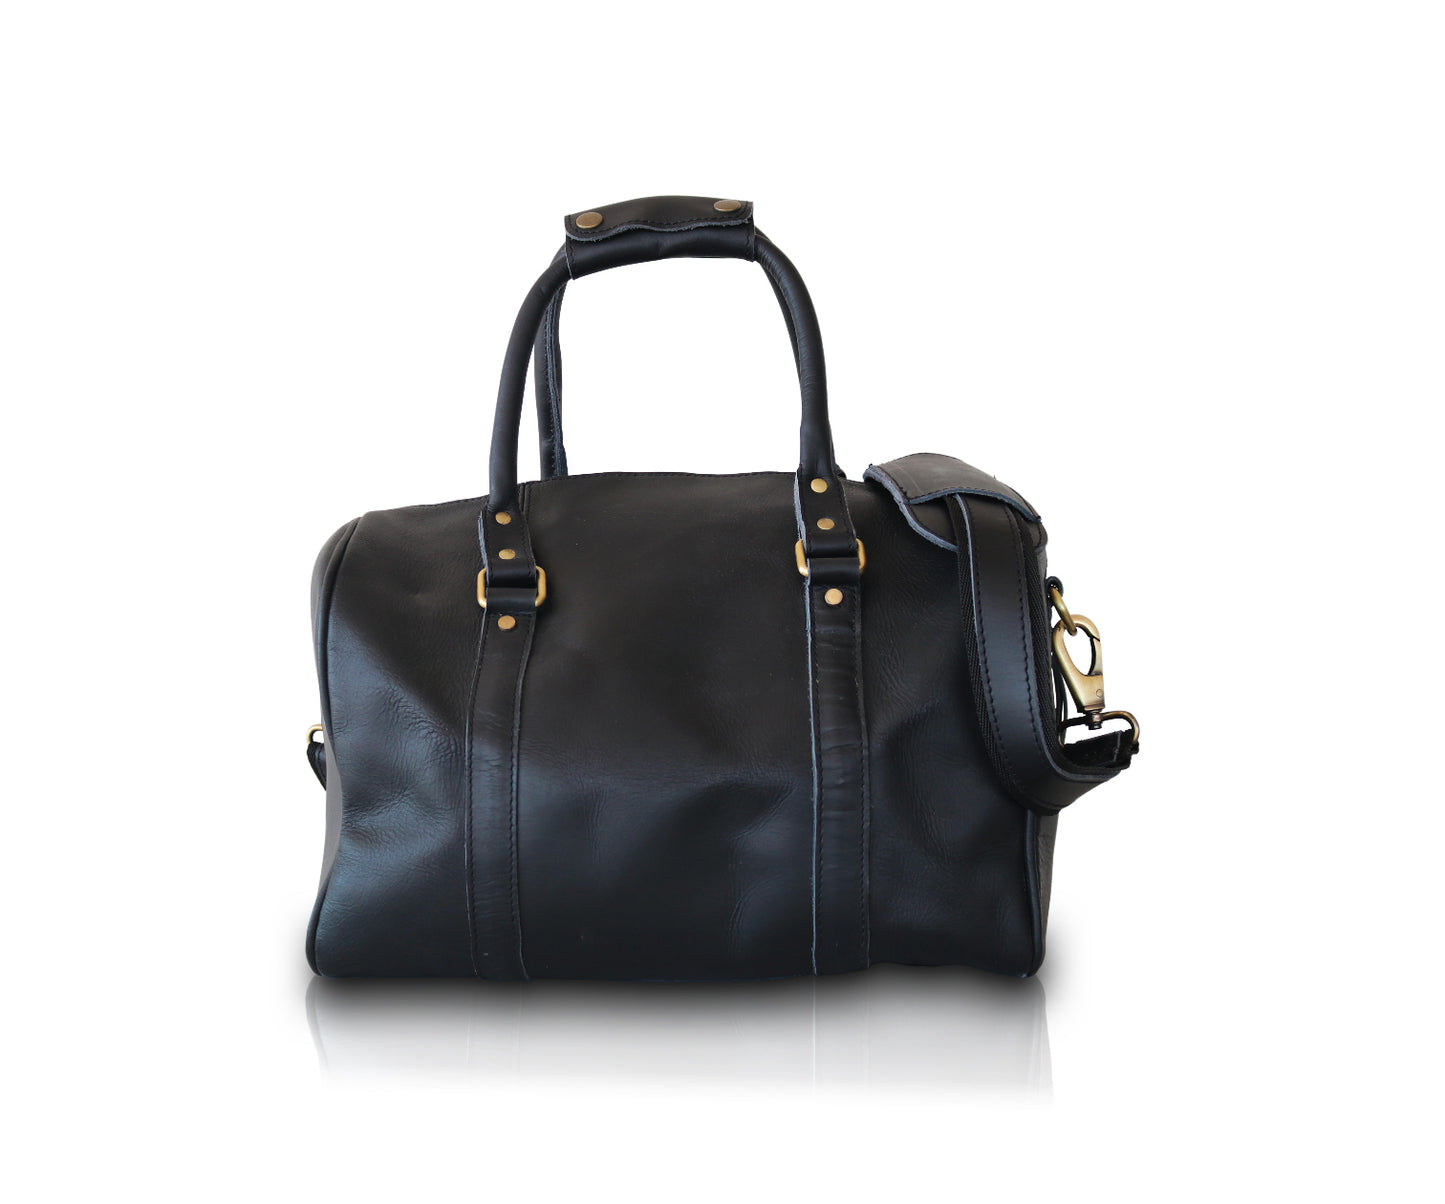 Leather Duffle Bag Black Travel Bag Personalized Black 